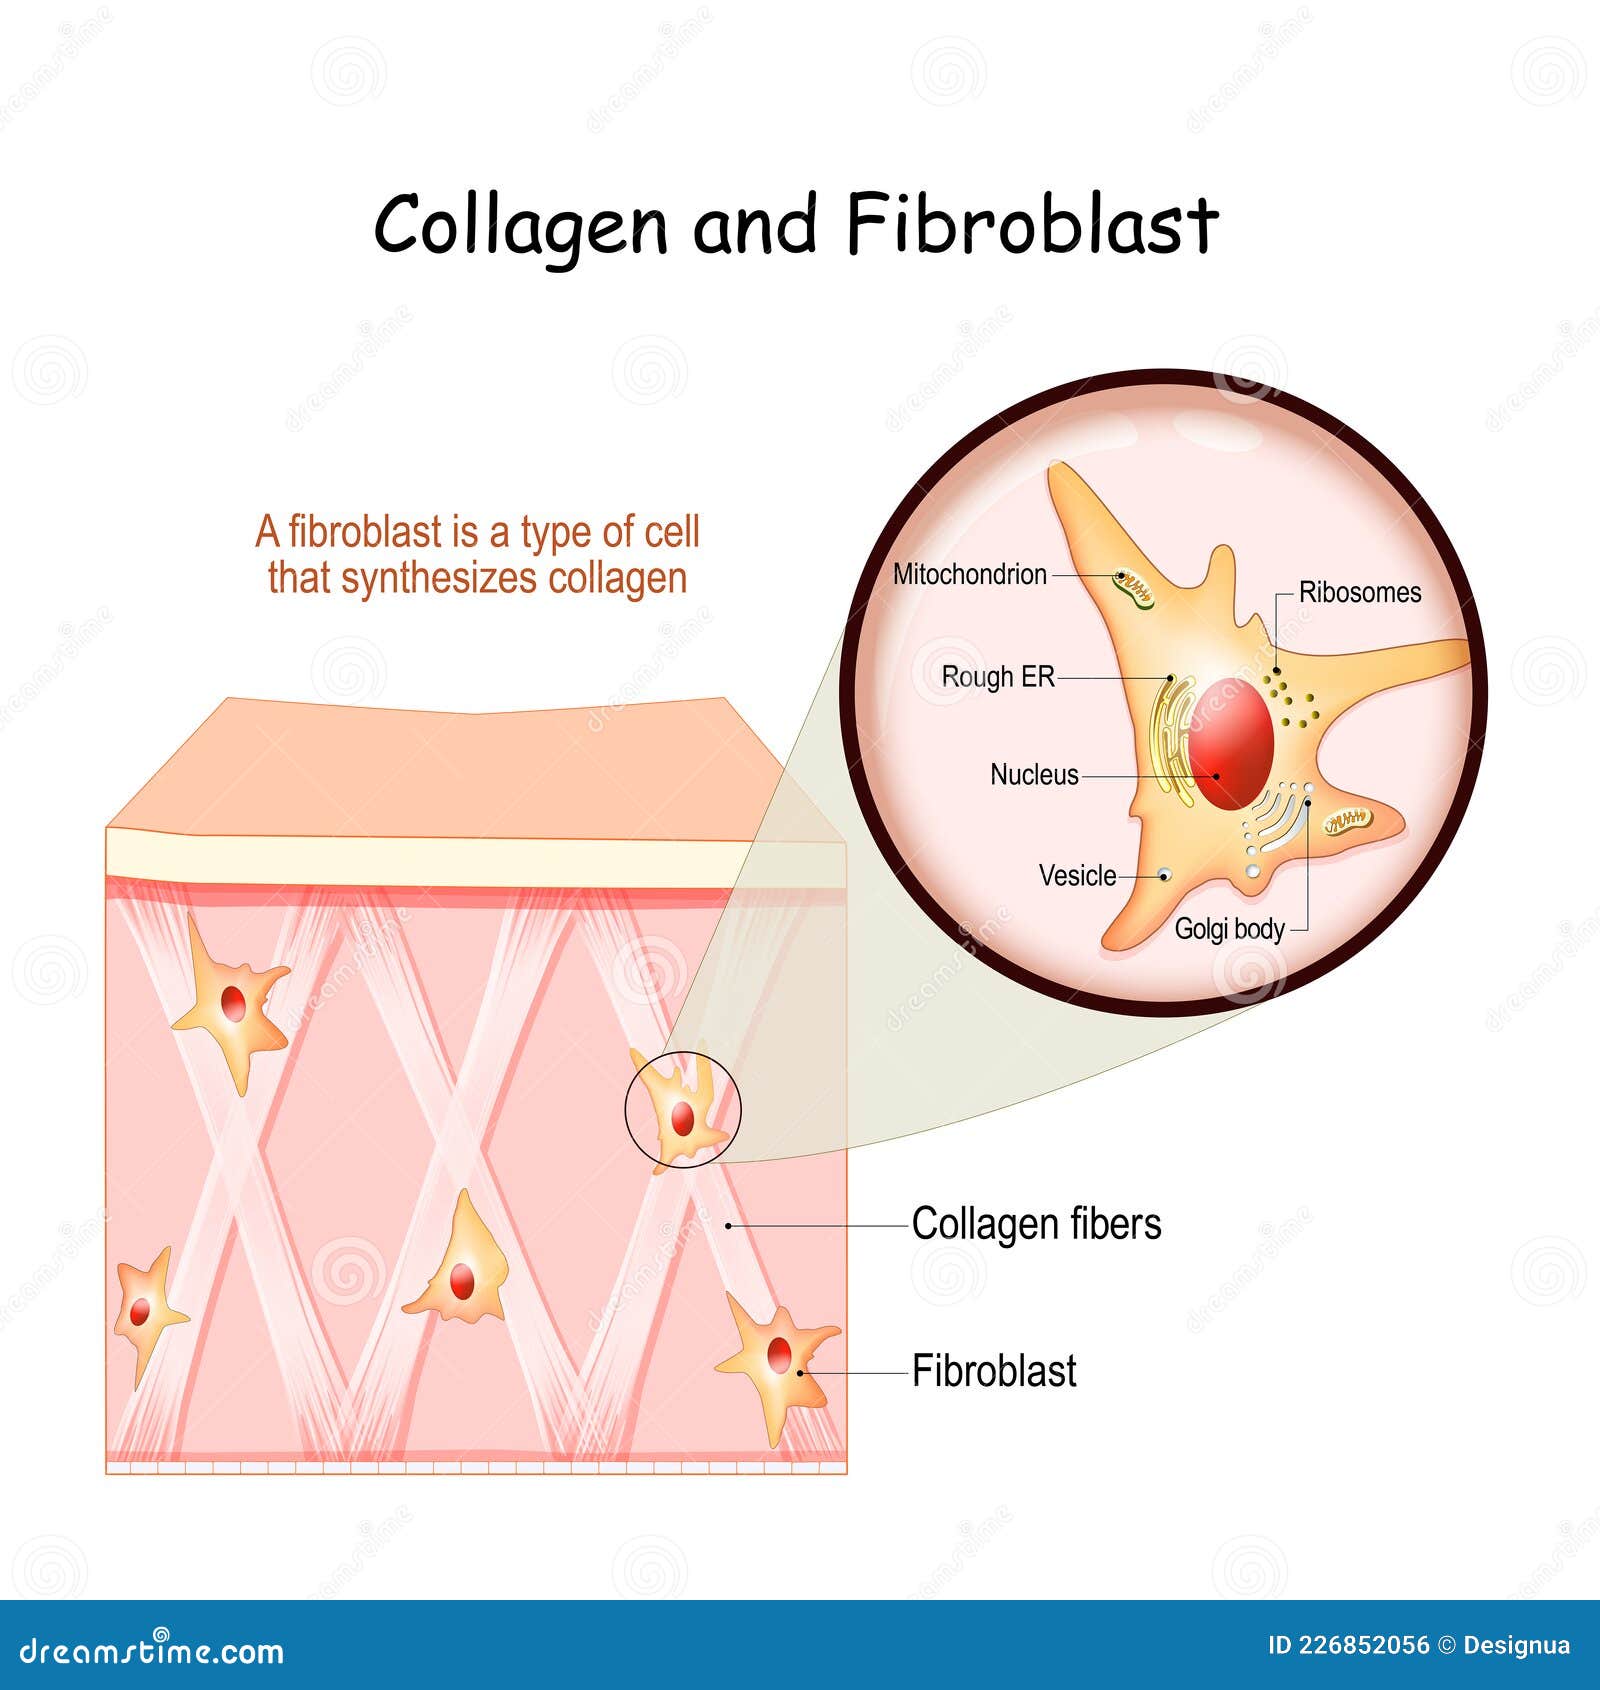 collagen and fibroblast